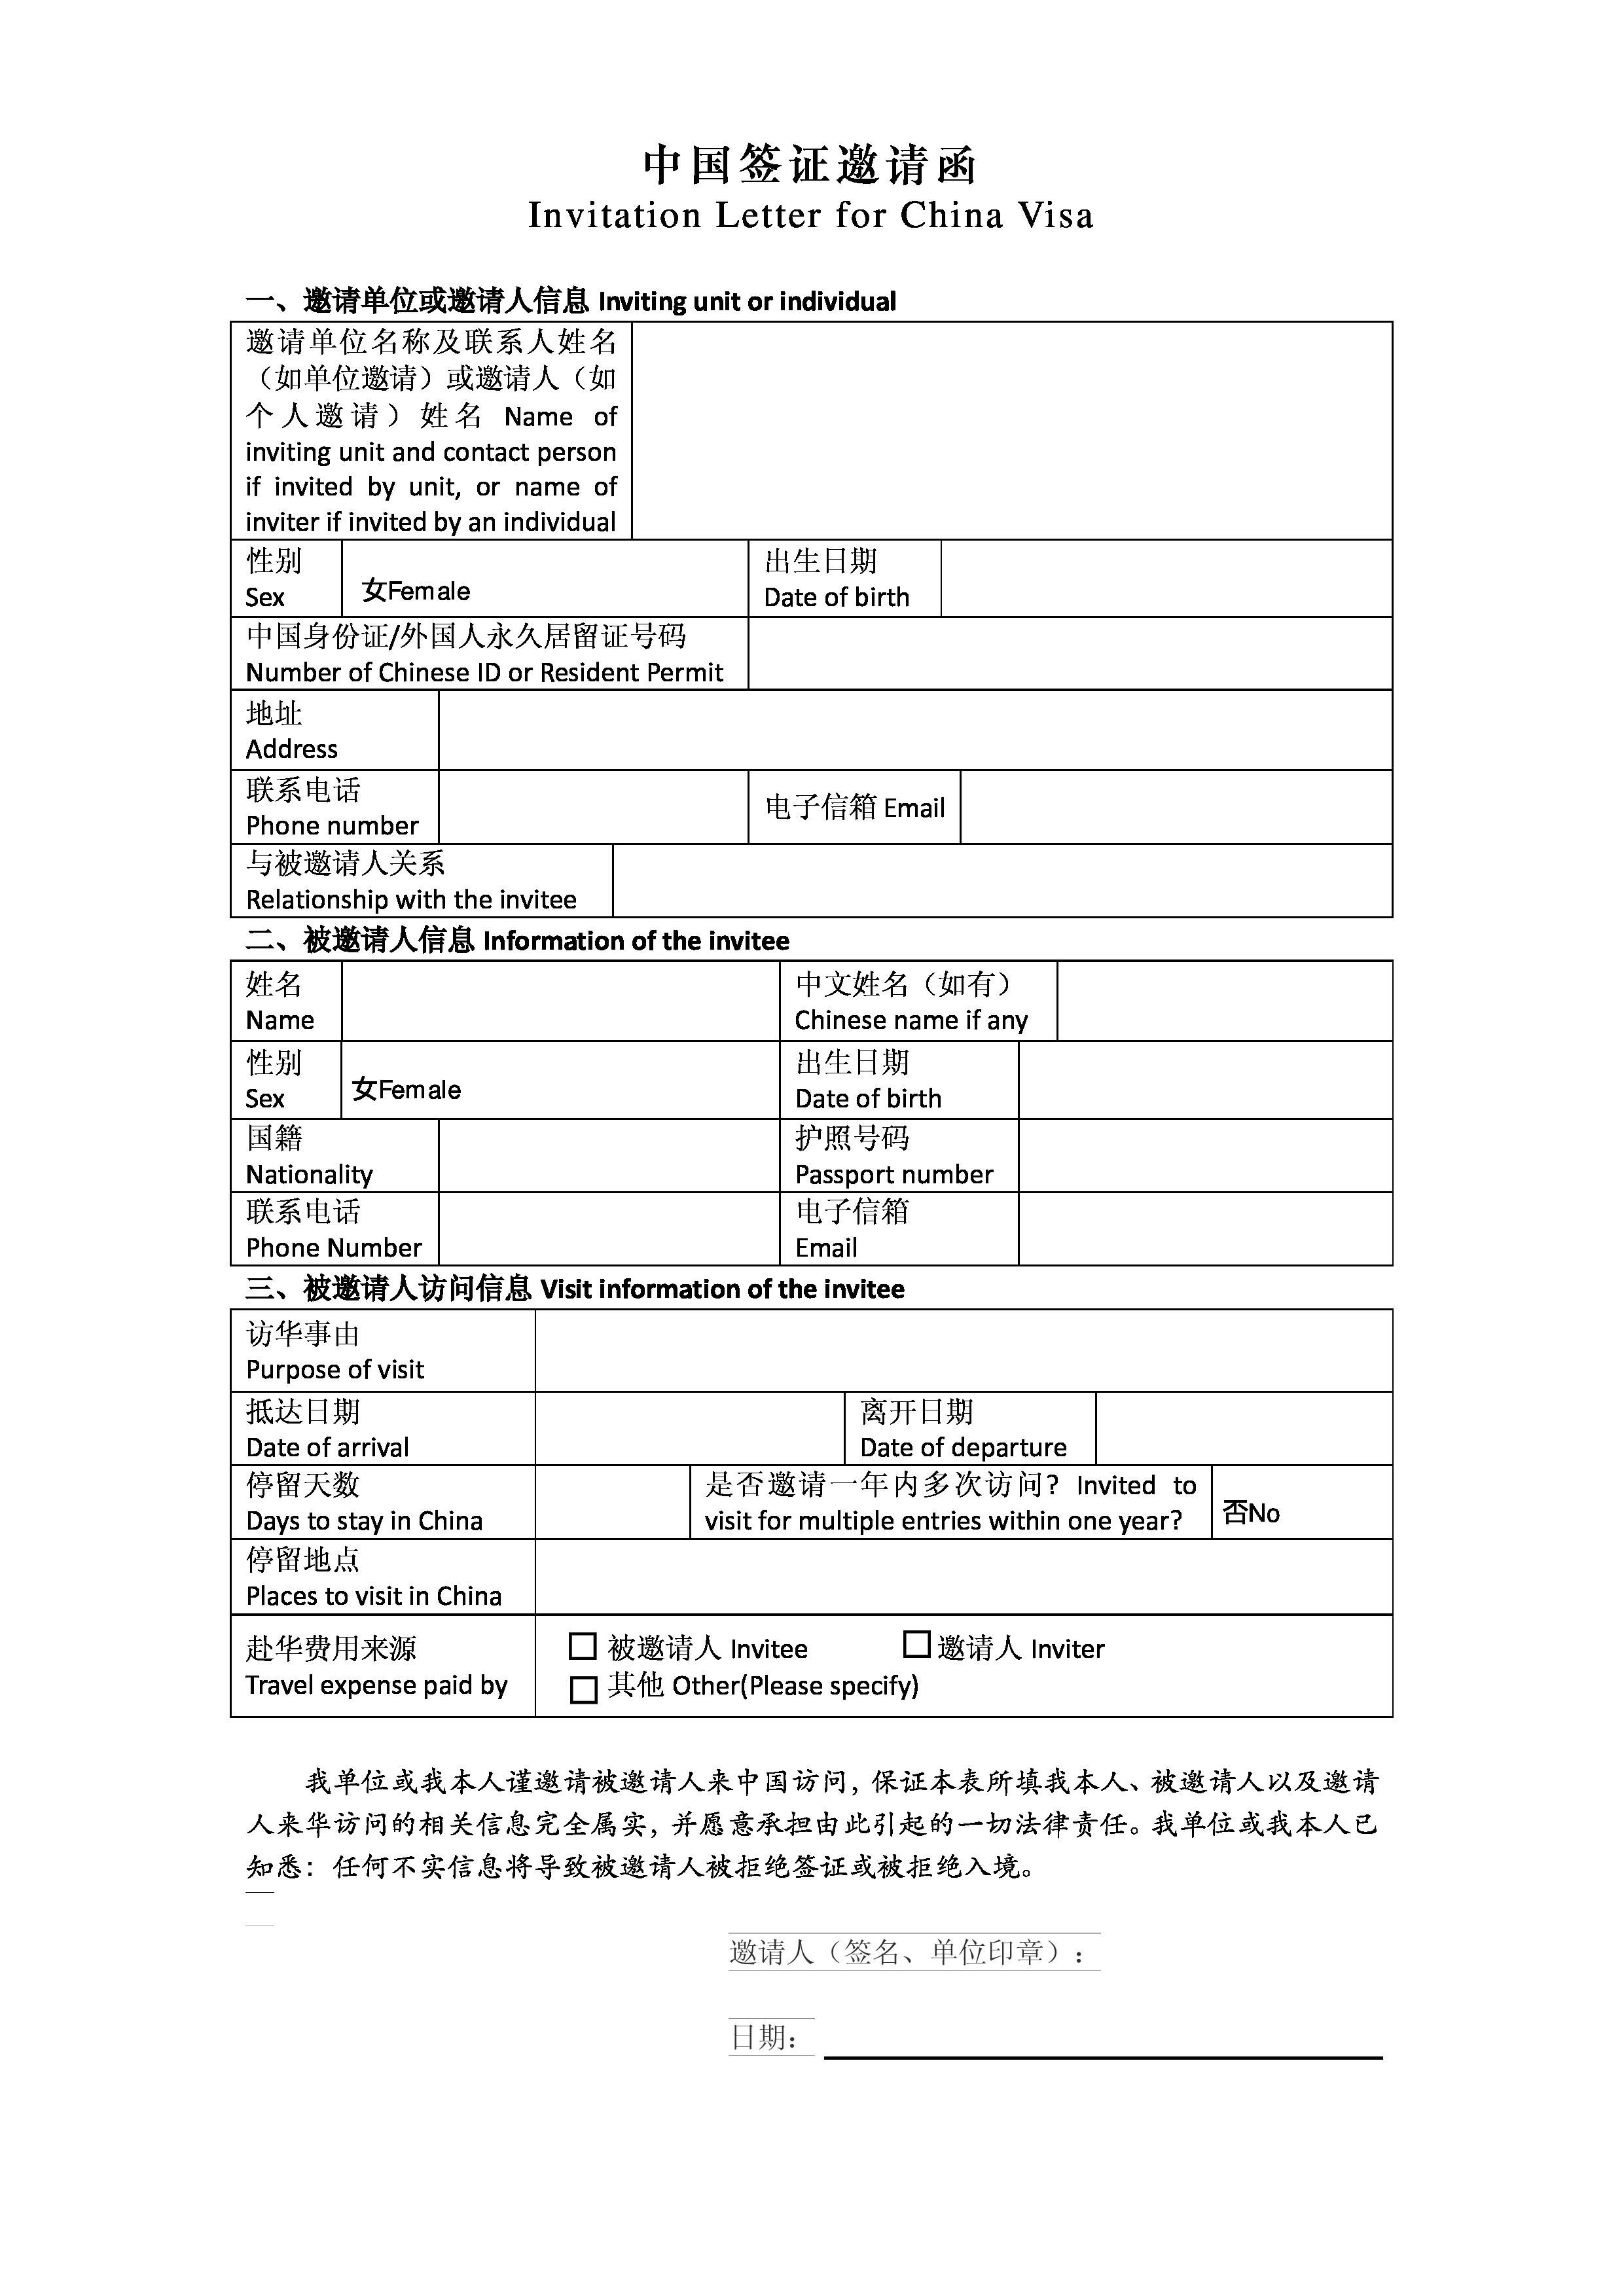 Invitation Letter for China Visa Template - Free Invitation Letter Chinese Visa Pdf Stylish Business Visa